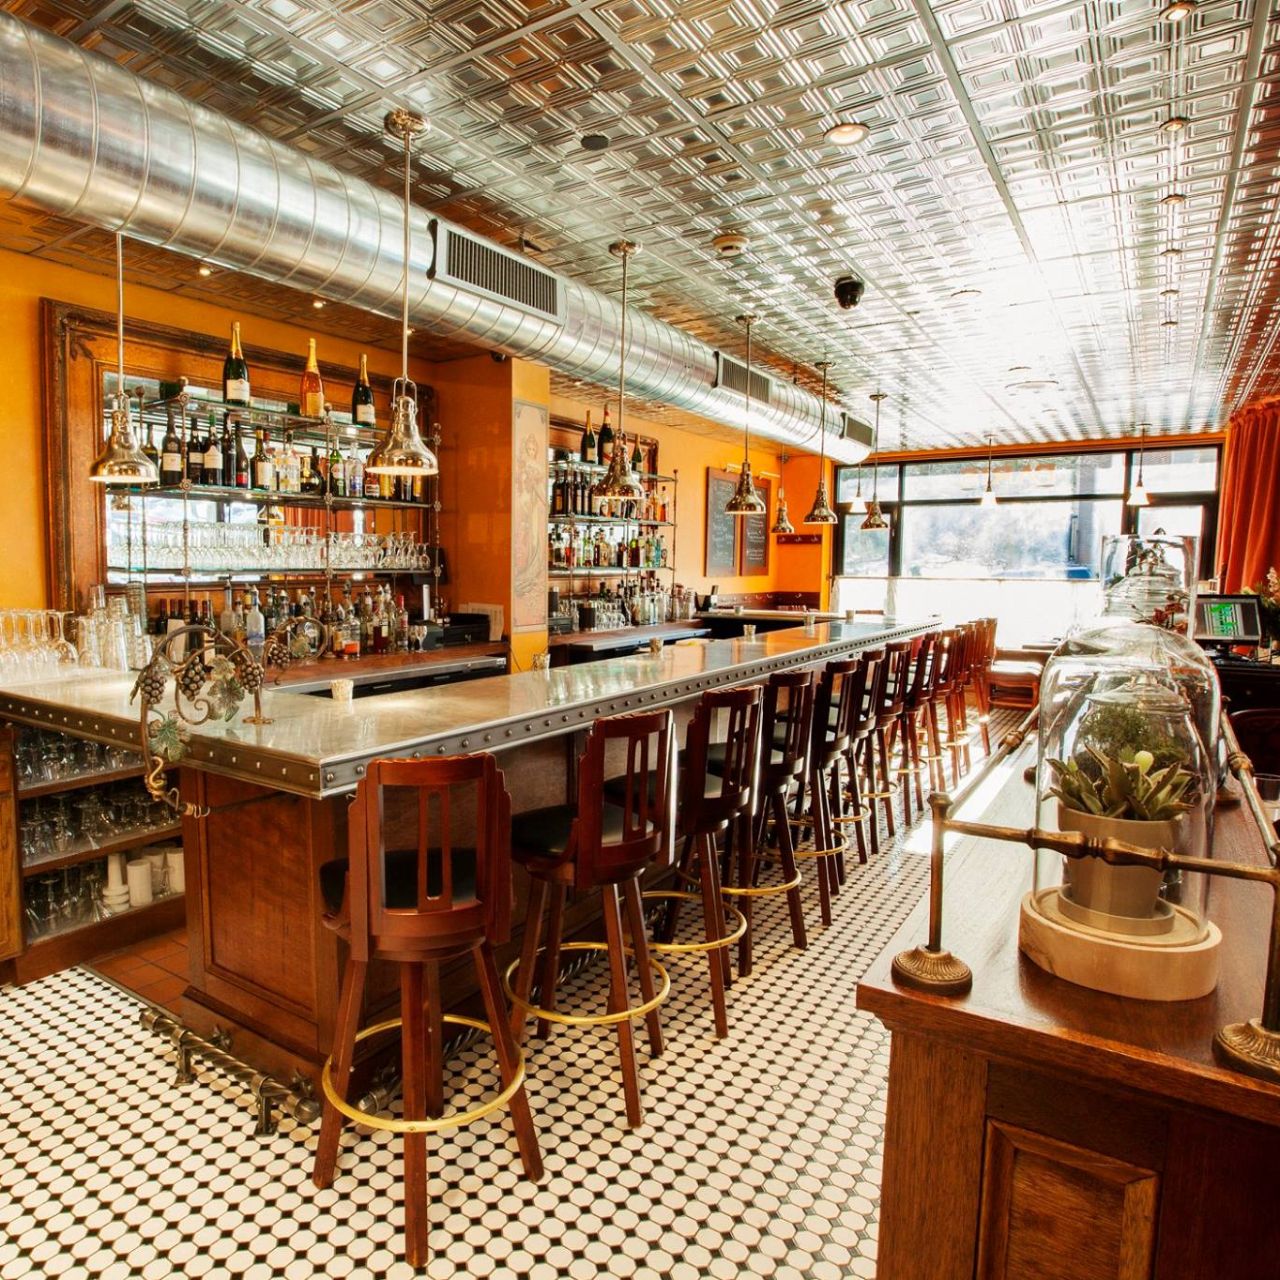 Paris Bistro - Dining Room - Chestnut Hill Restaurant